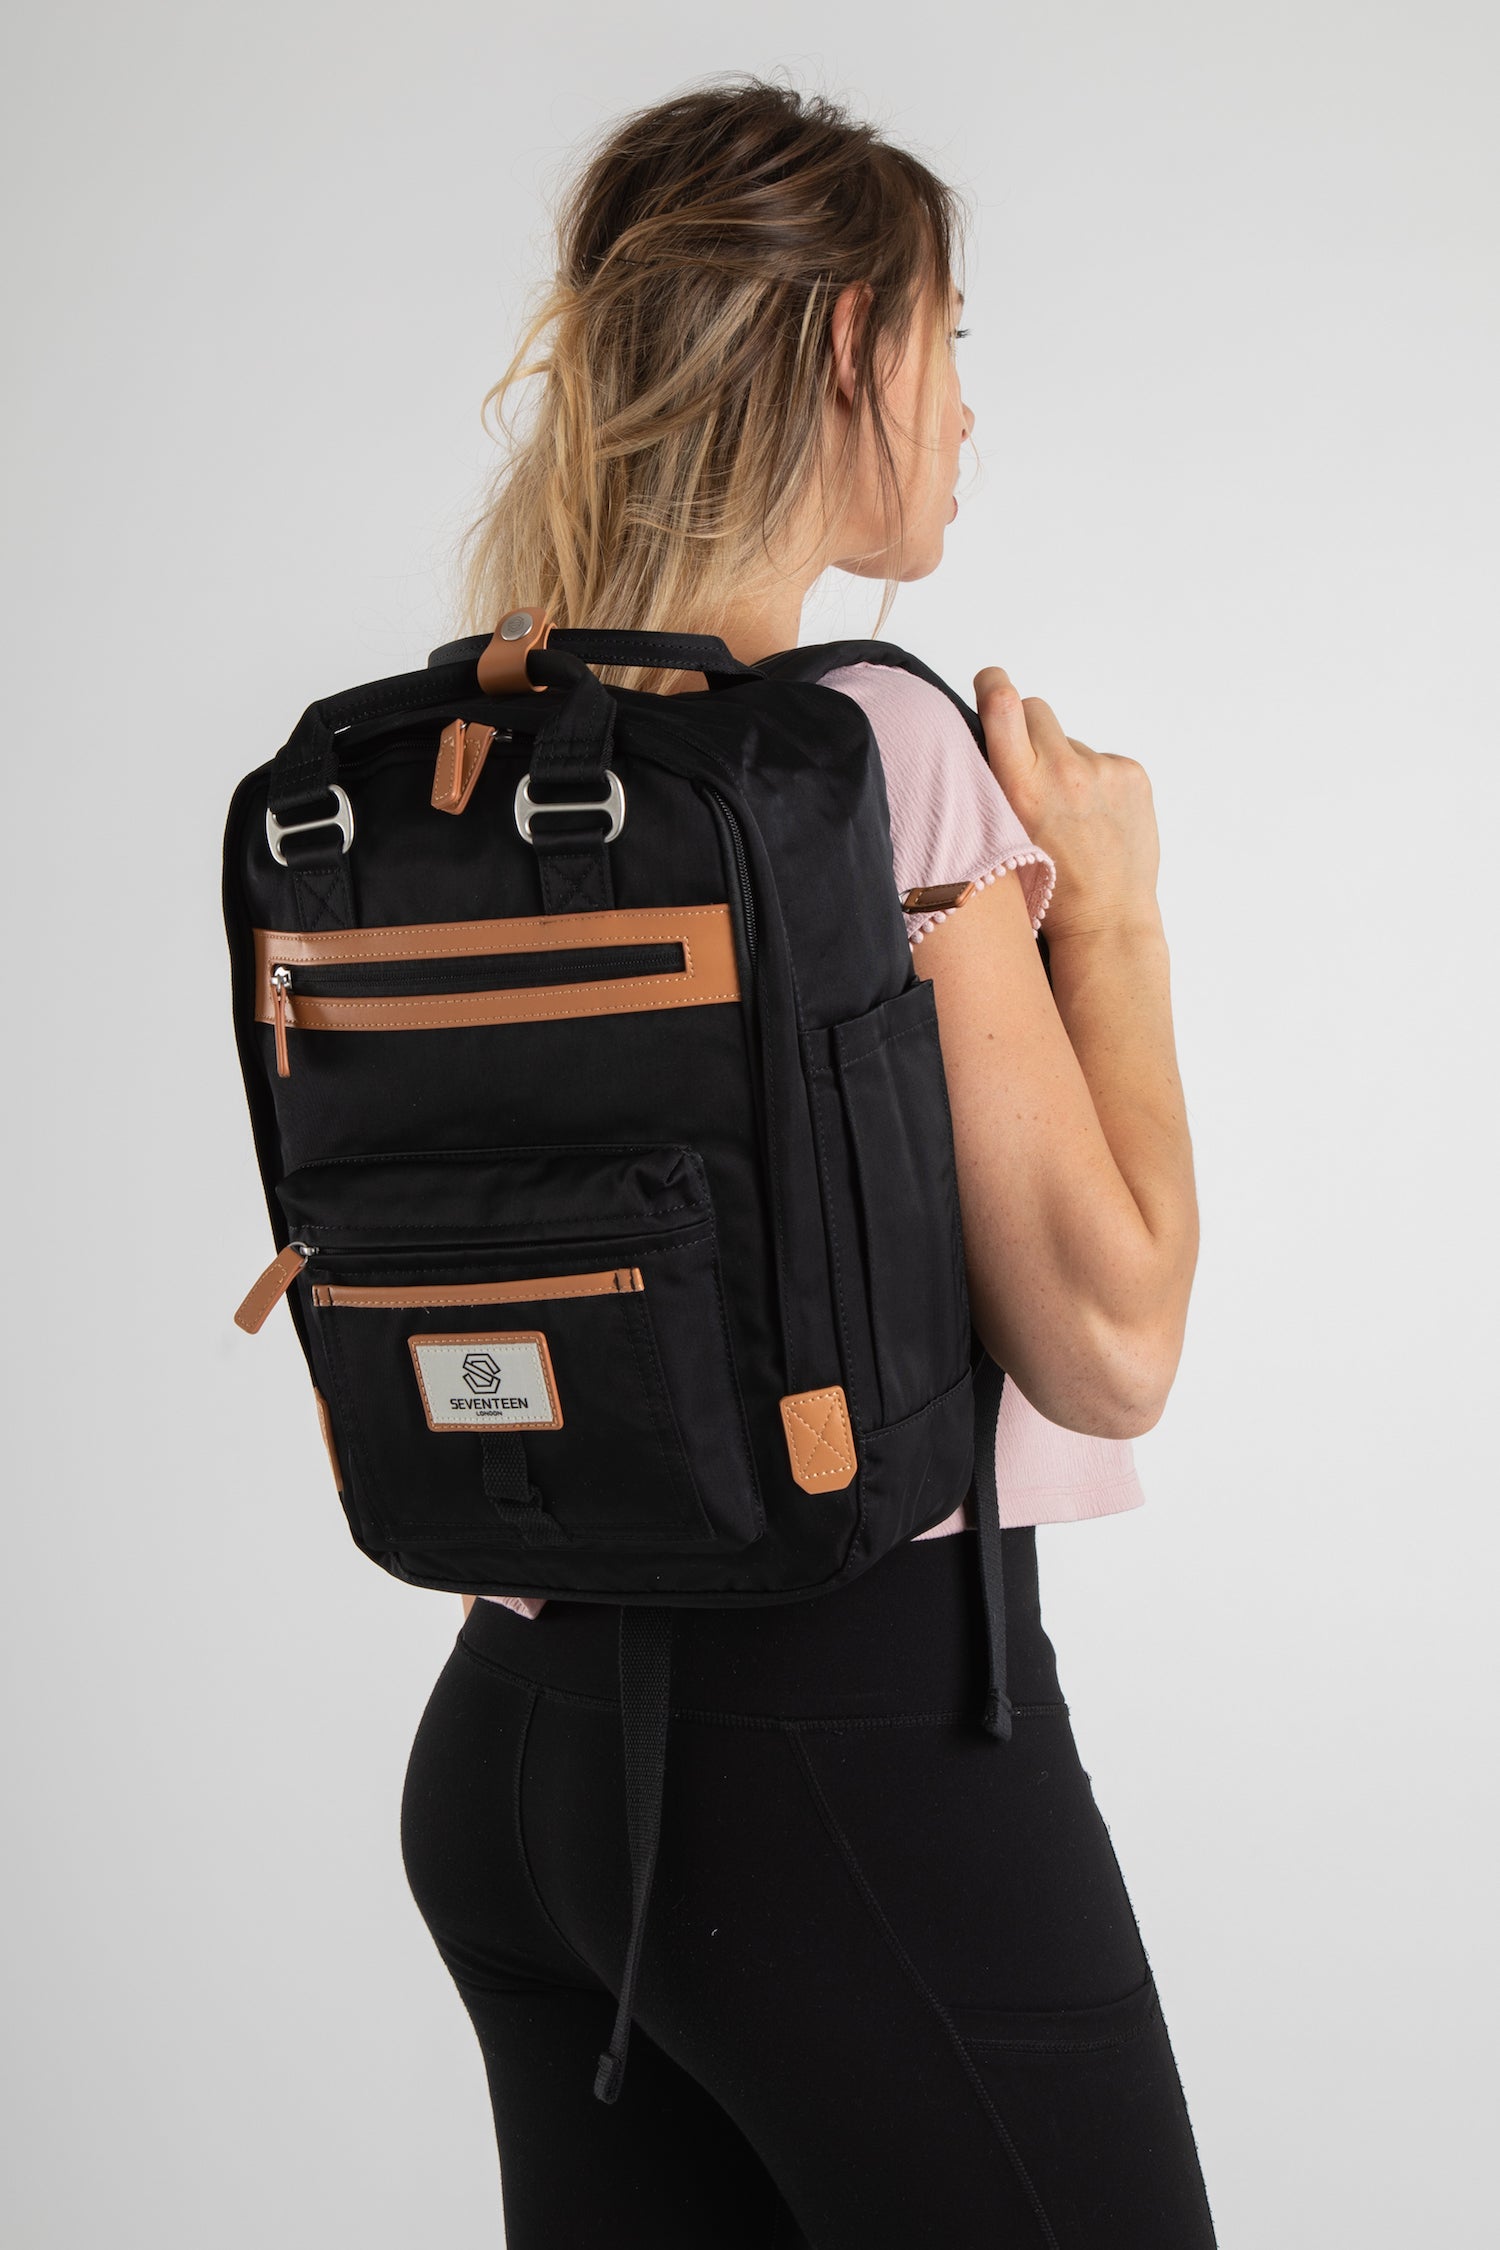 Wimbledon Backpack - Black with Tan